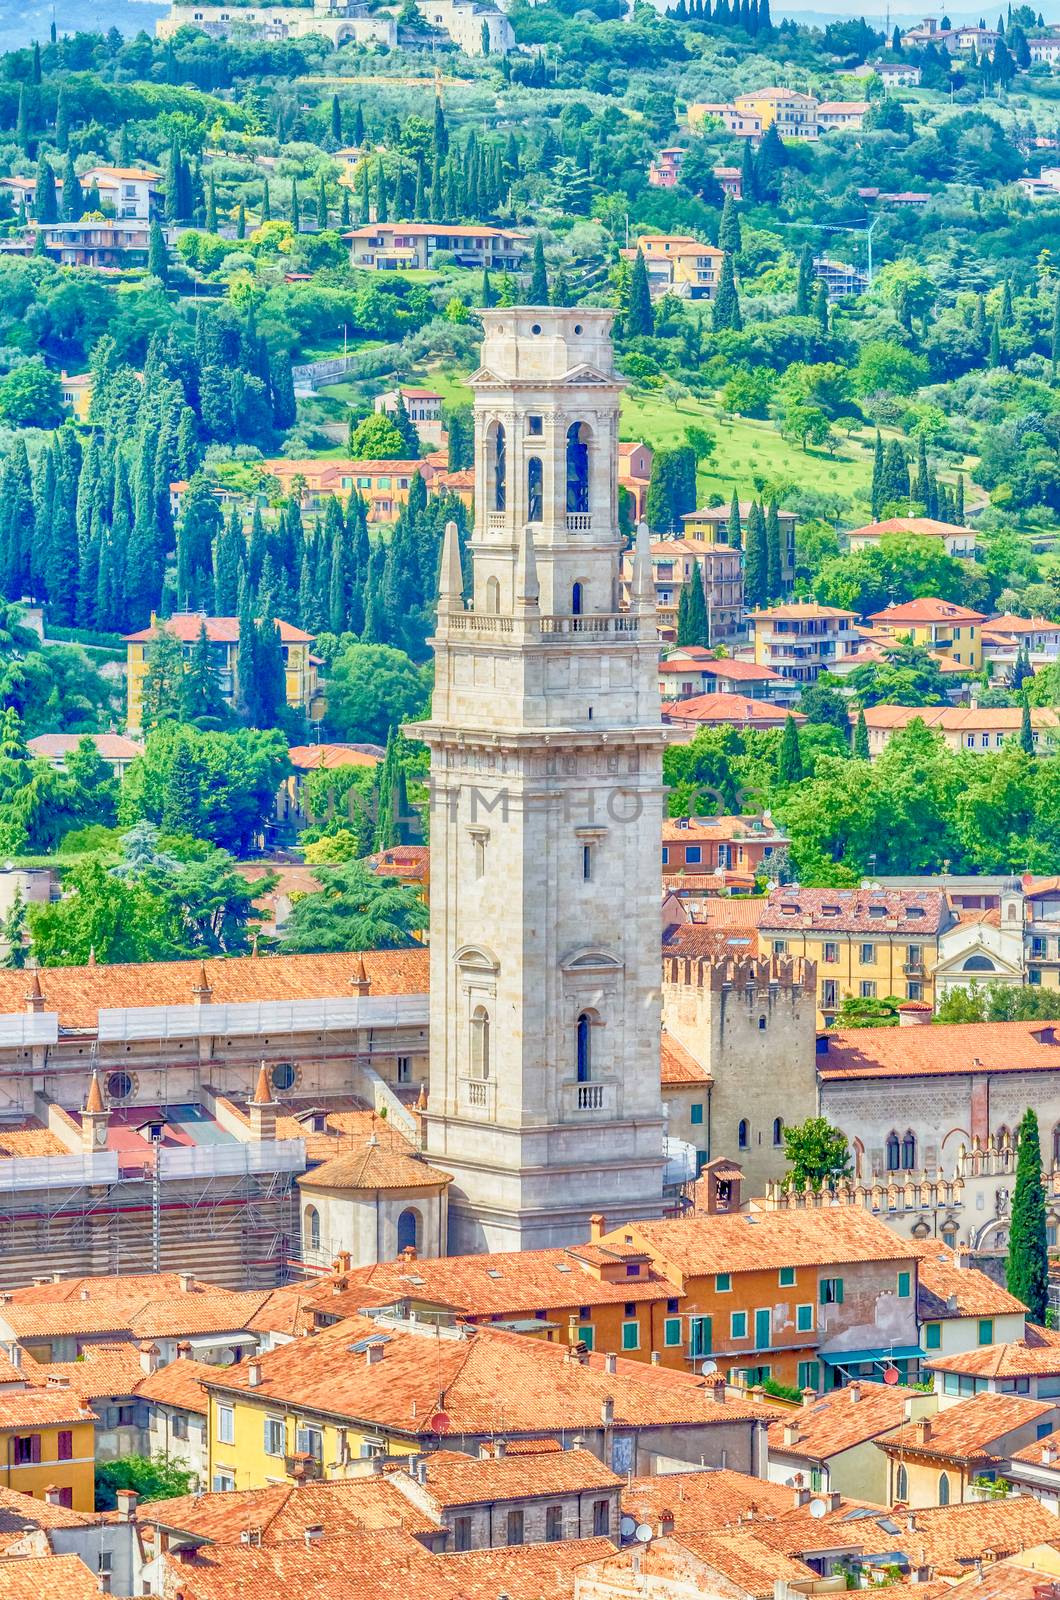 Tower of Verona Cathedral by marcorubino